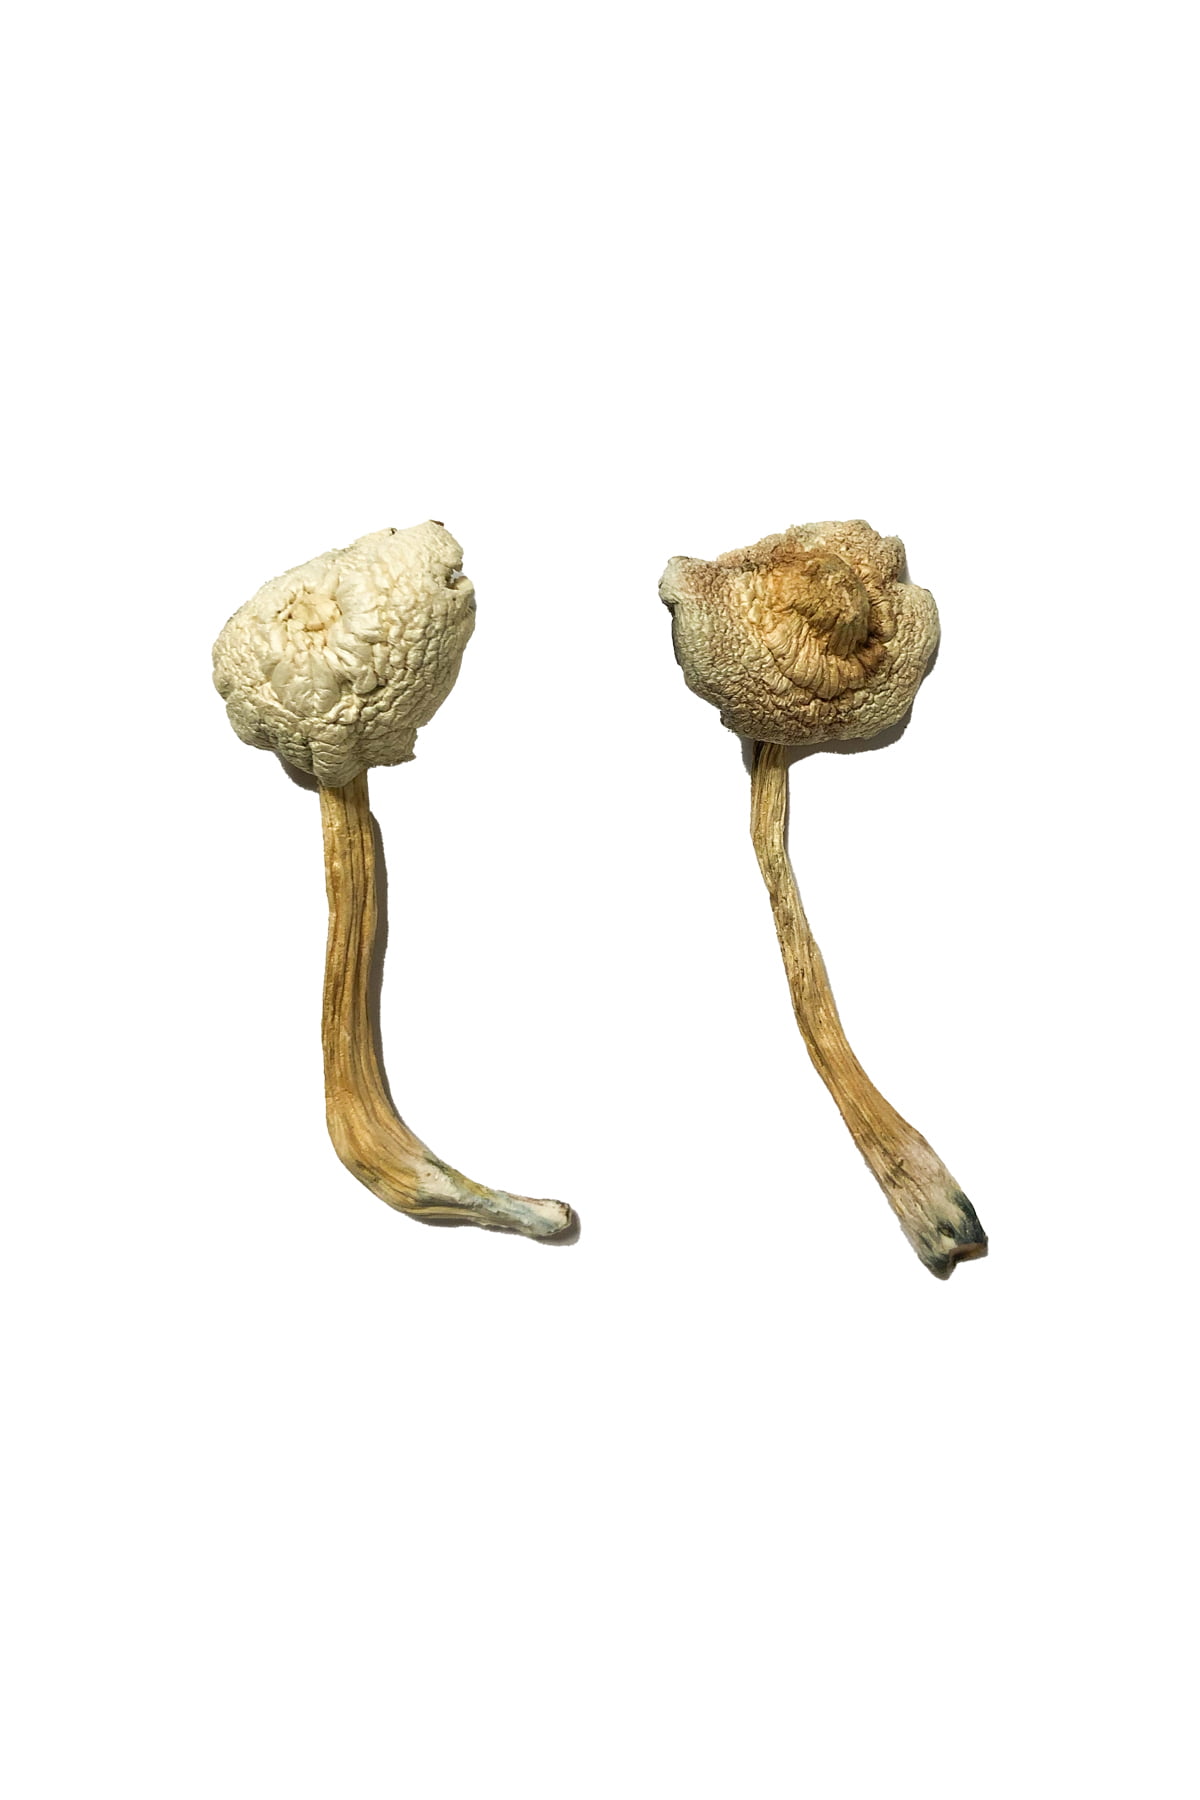 Buy Rusty Whyte Magic Mushrooms online